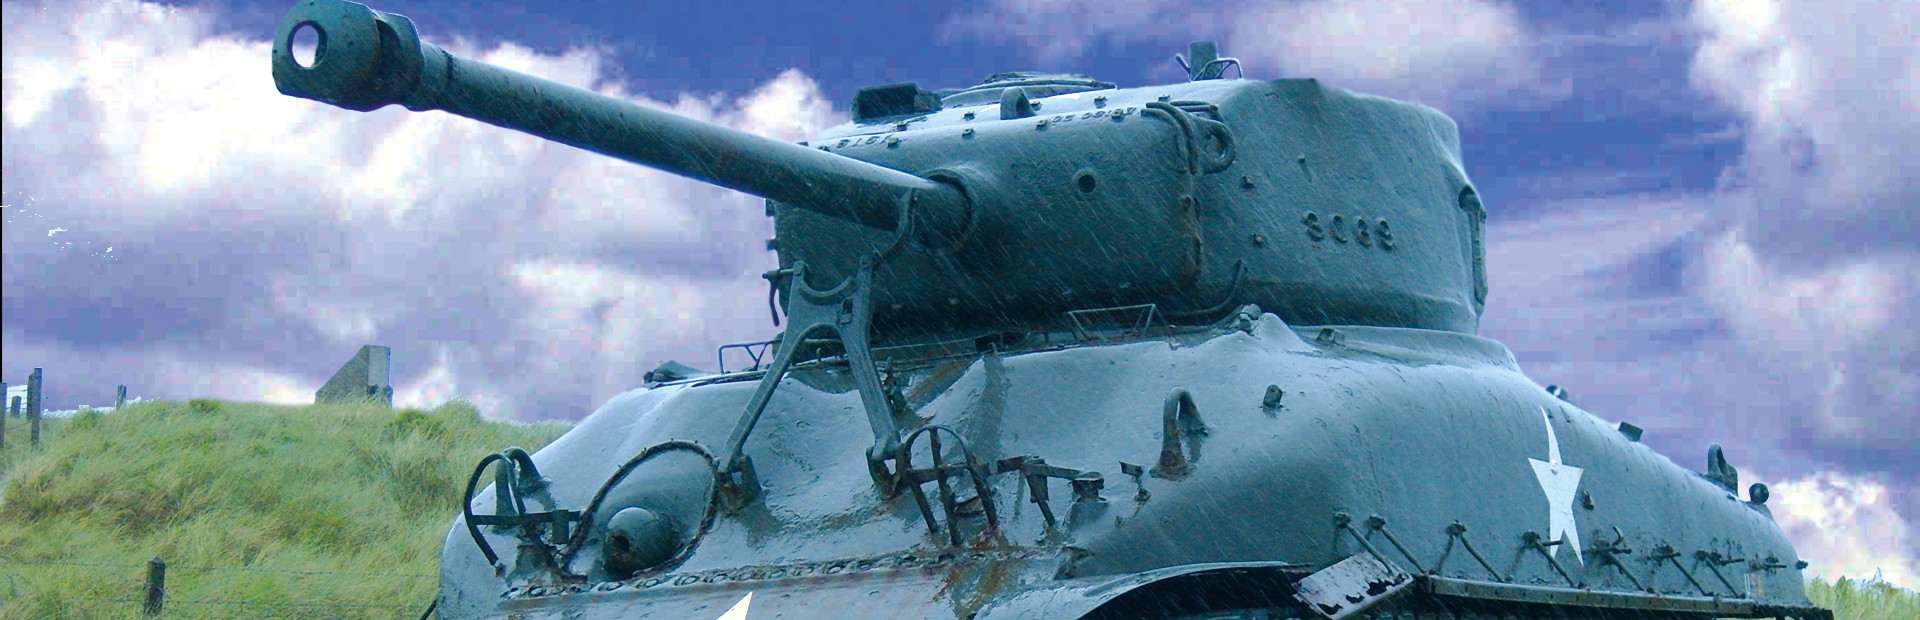 Military Life: Tank Simulator cover image